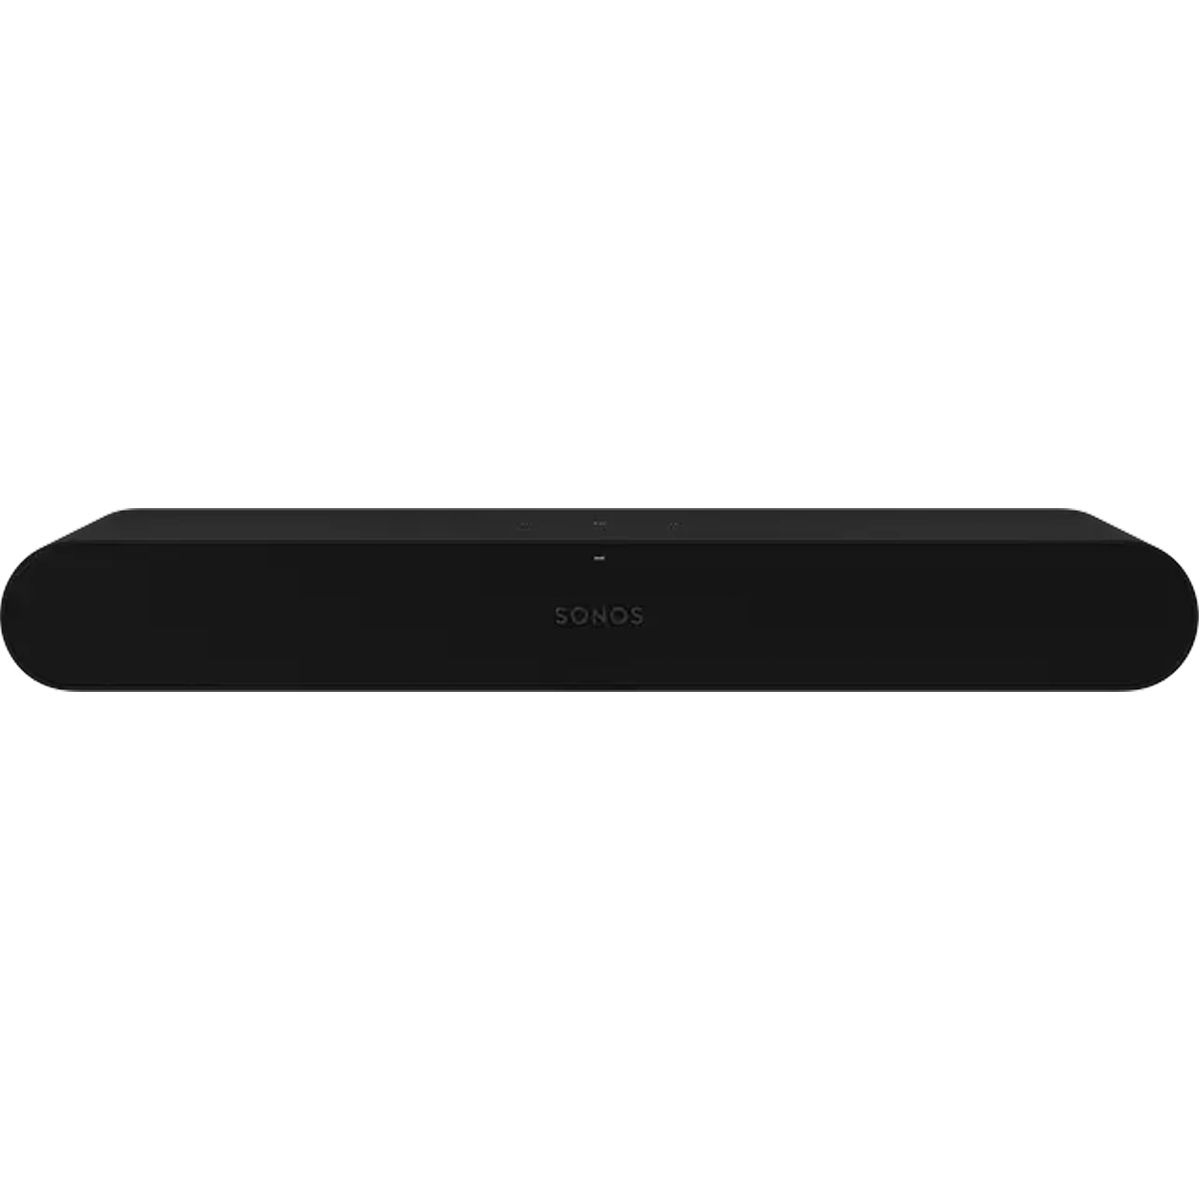 Sonos Ray Compact Soundbar - Black - front view